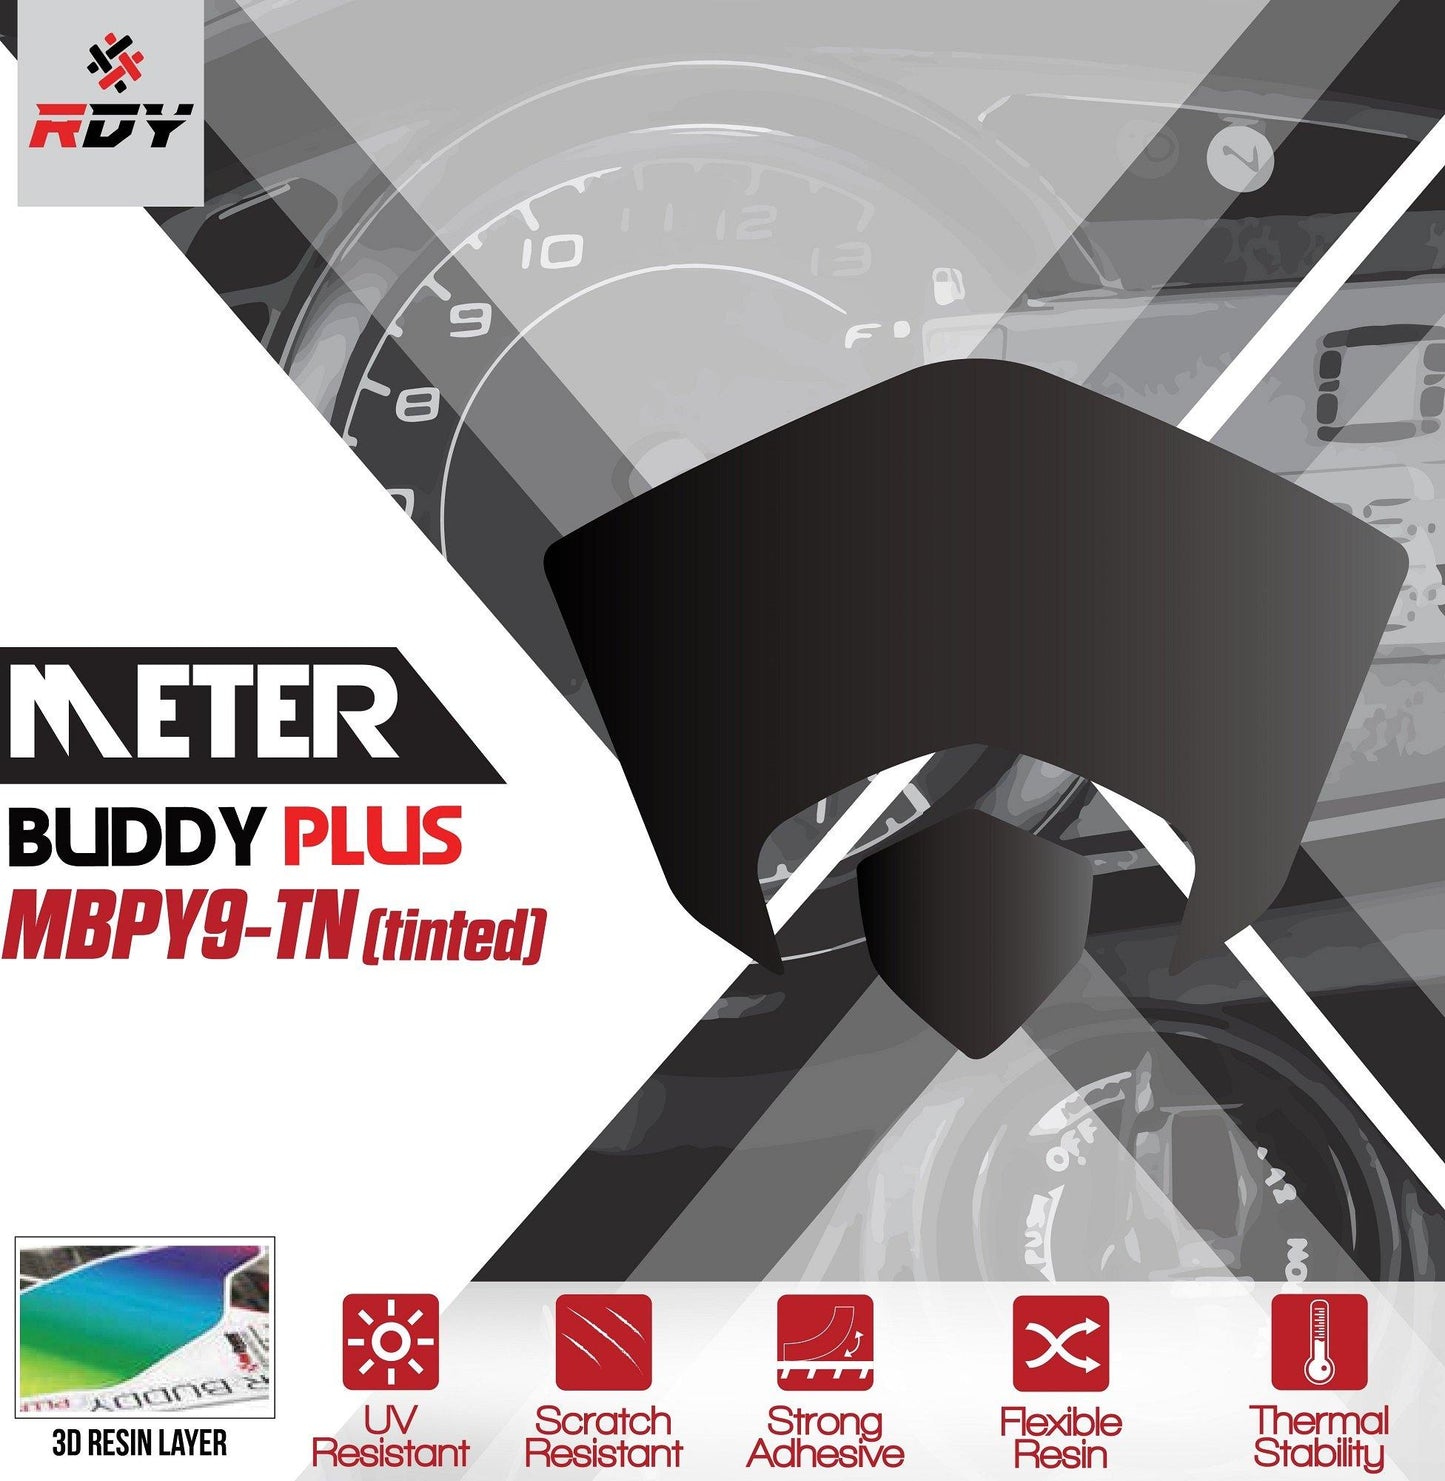 RDY Meter Buddy Plus fits for Yamaha Mio / Ego Avantiz 125 ('17-) - Durian Bikers